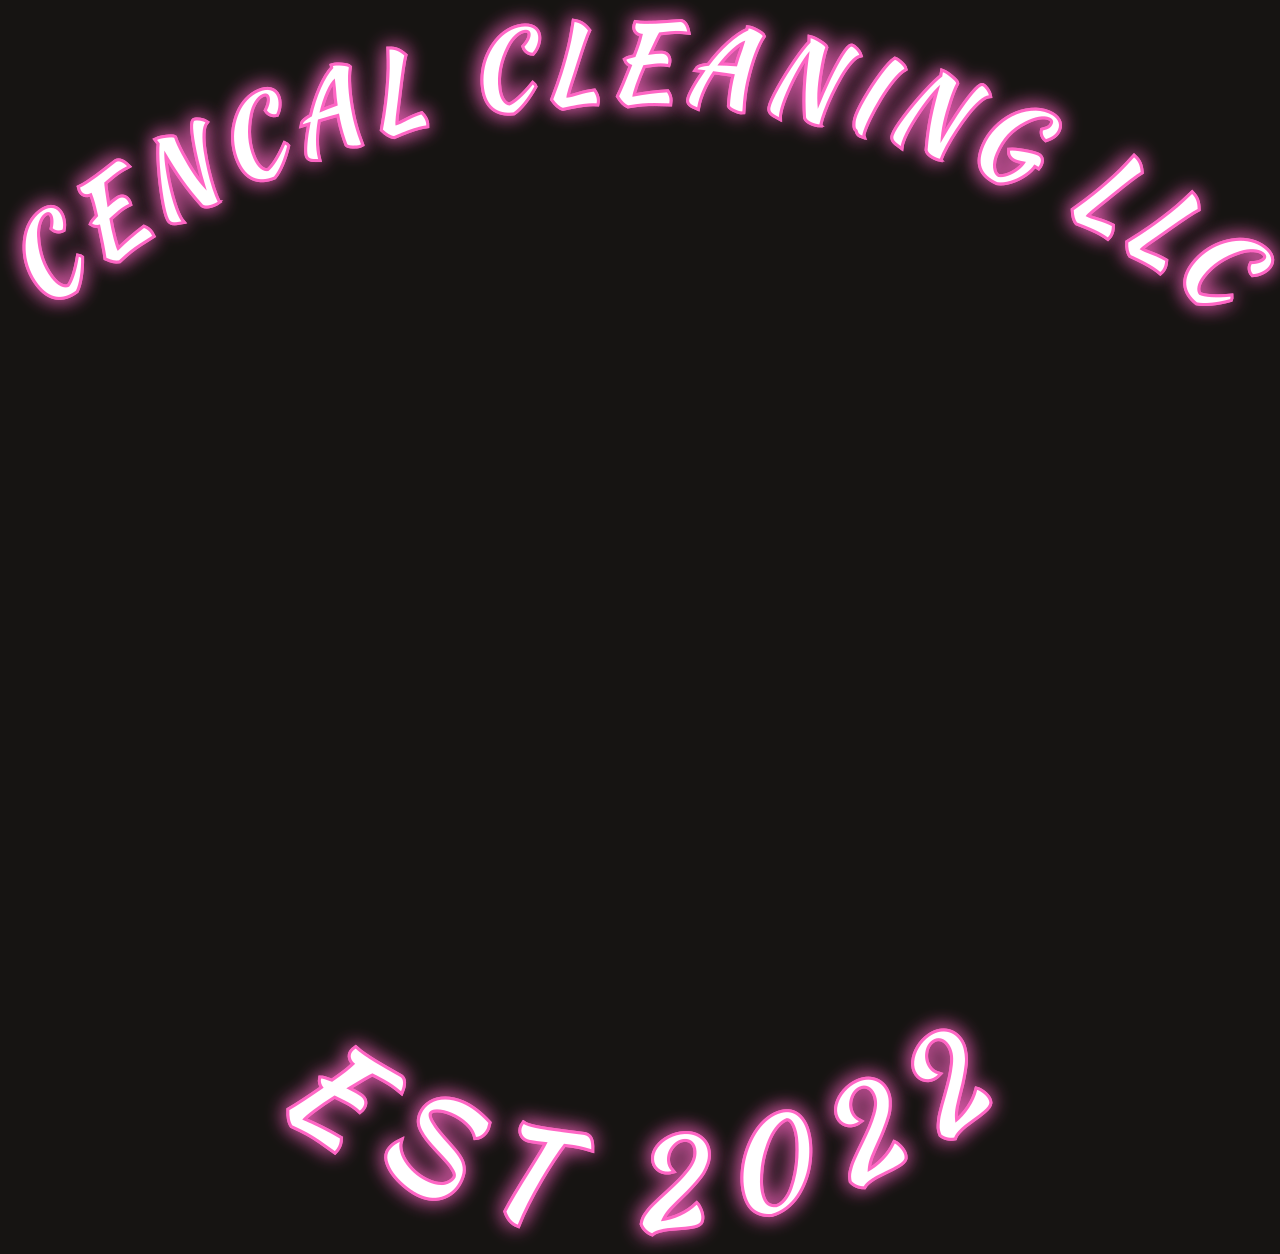 CENCAL CLEANING LLC's logo